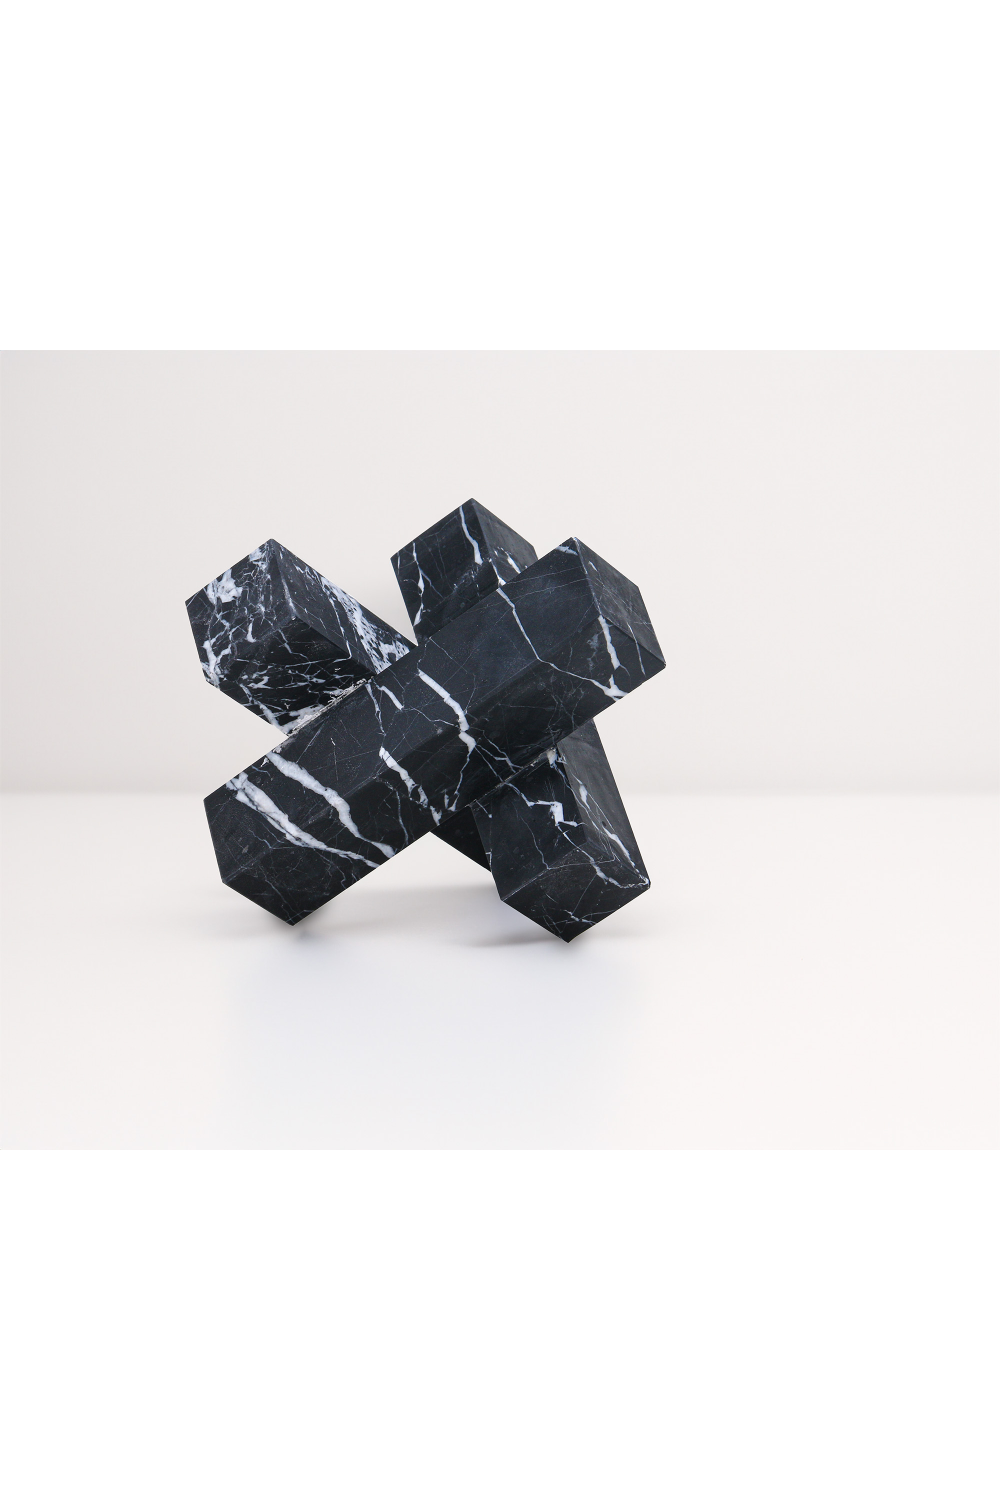 Black Marble Modern Sculpture | Liang & Eimil Jada | Oroa.com